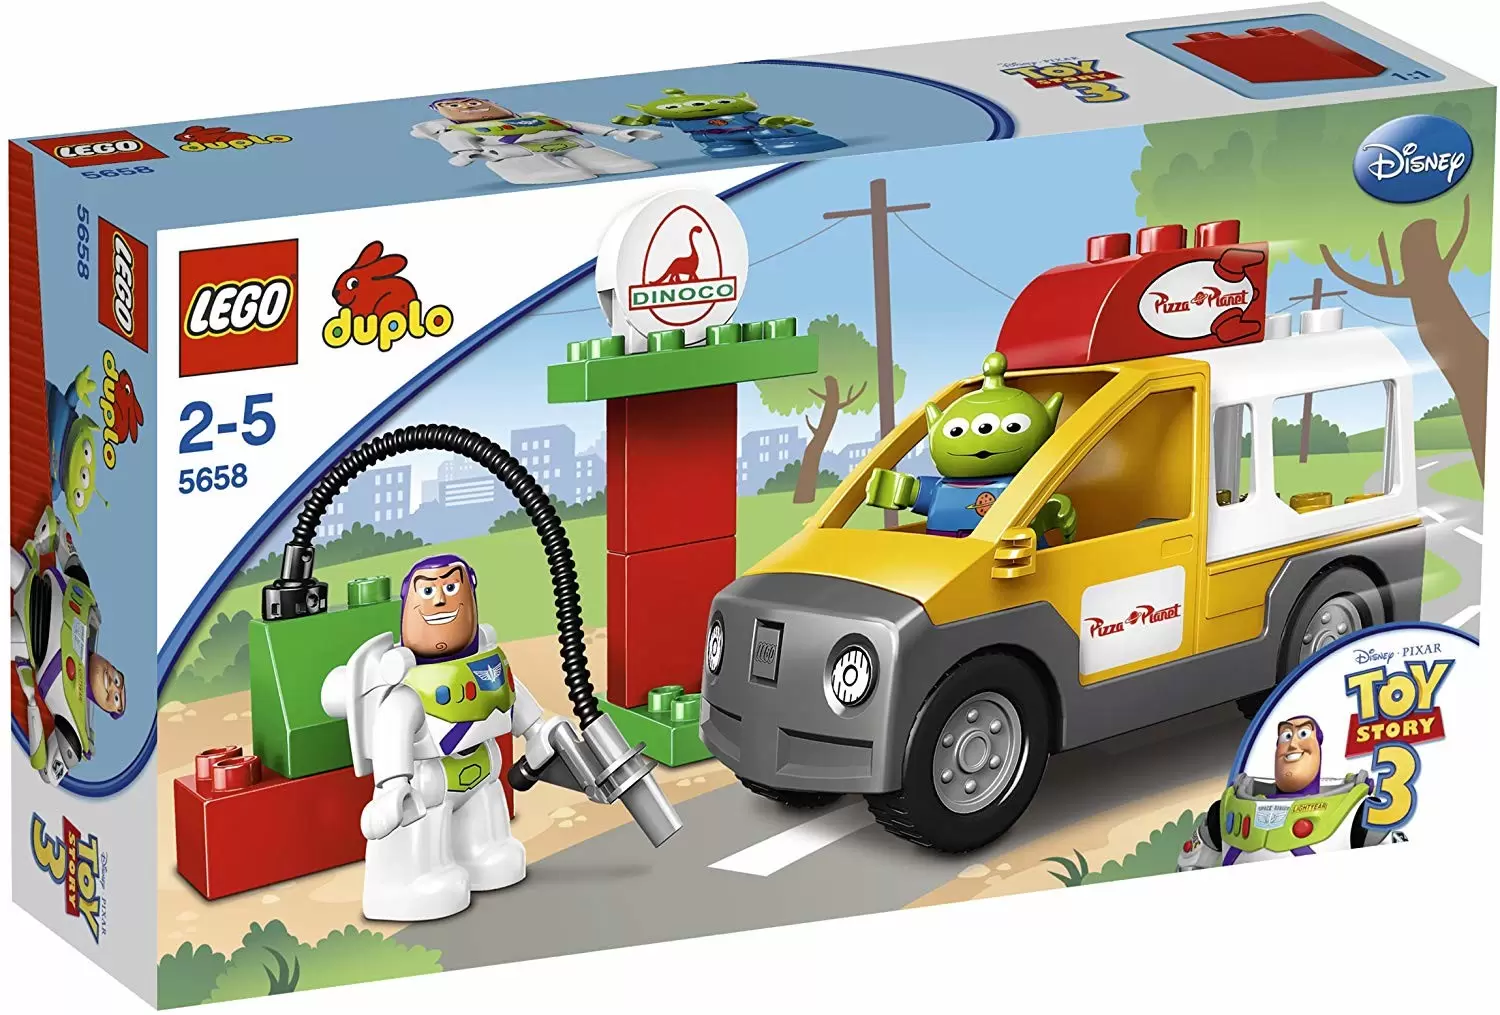 LEGO Duplo - Pizza Planet Truck